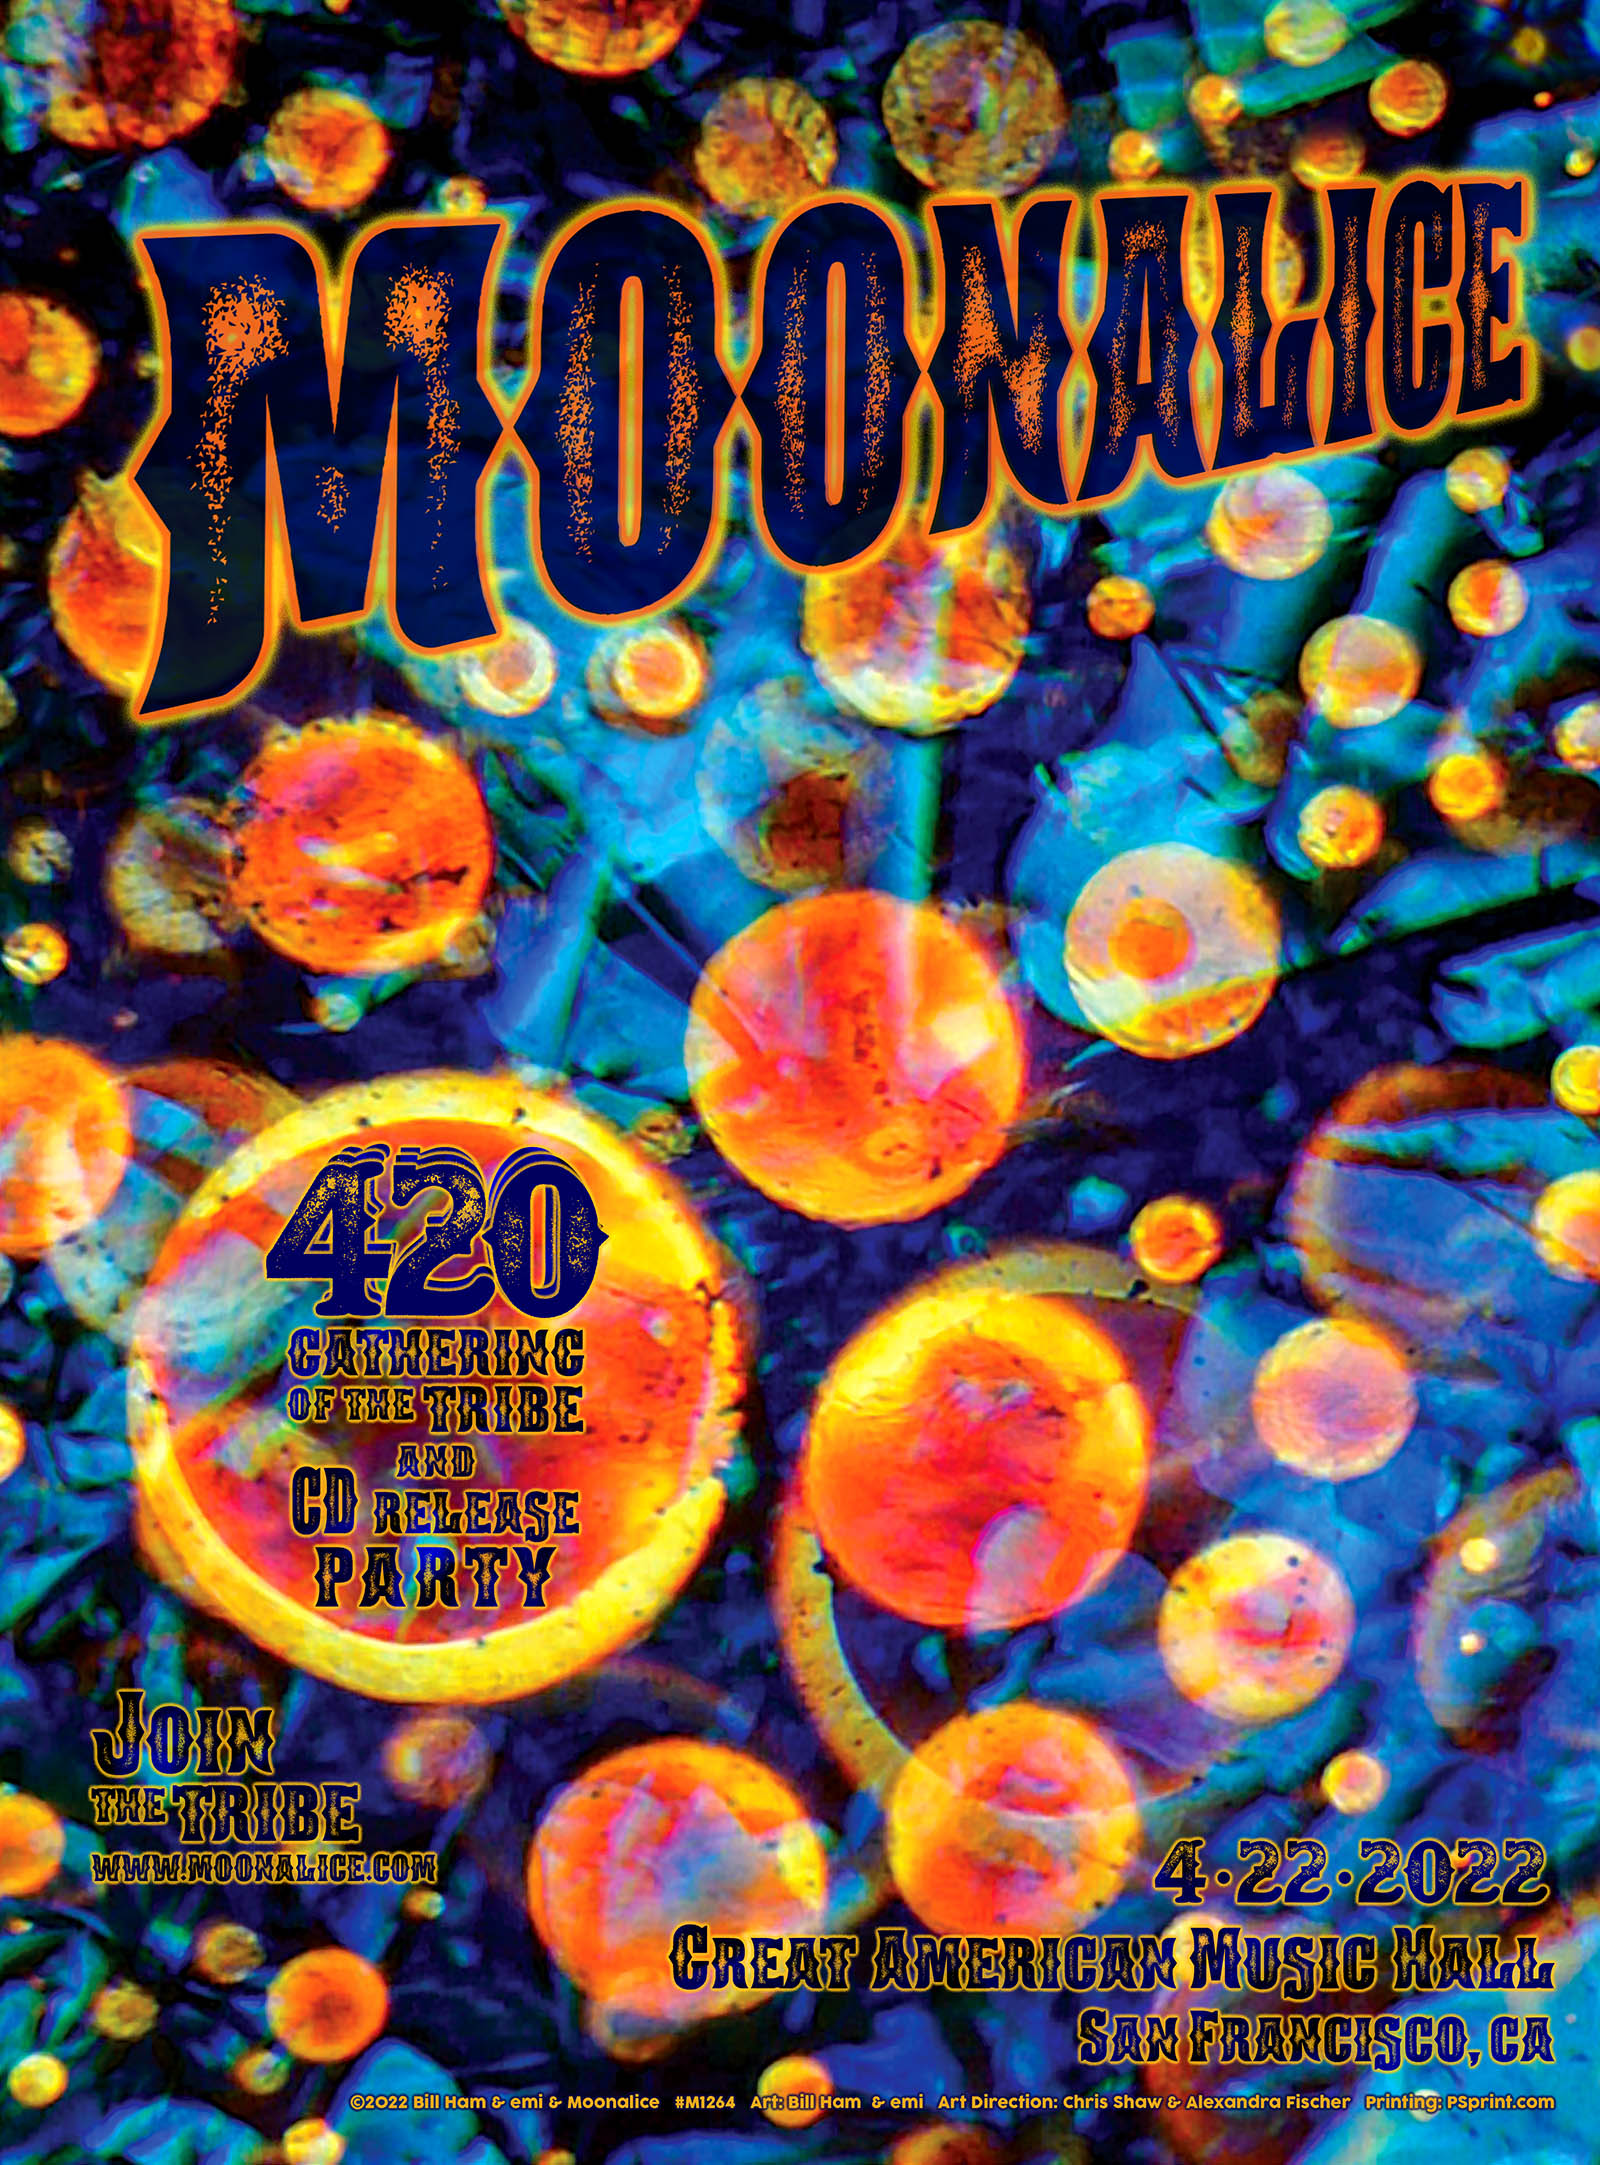 Moonalice 420 poster 2022 Bill Ham and emi